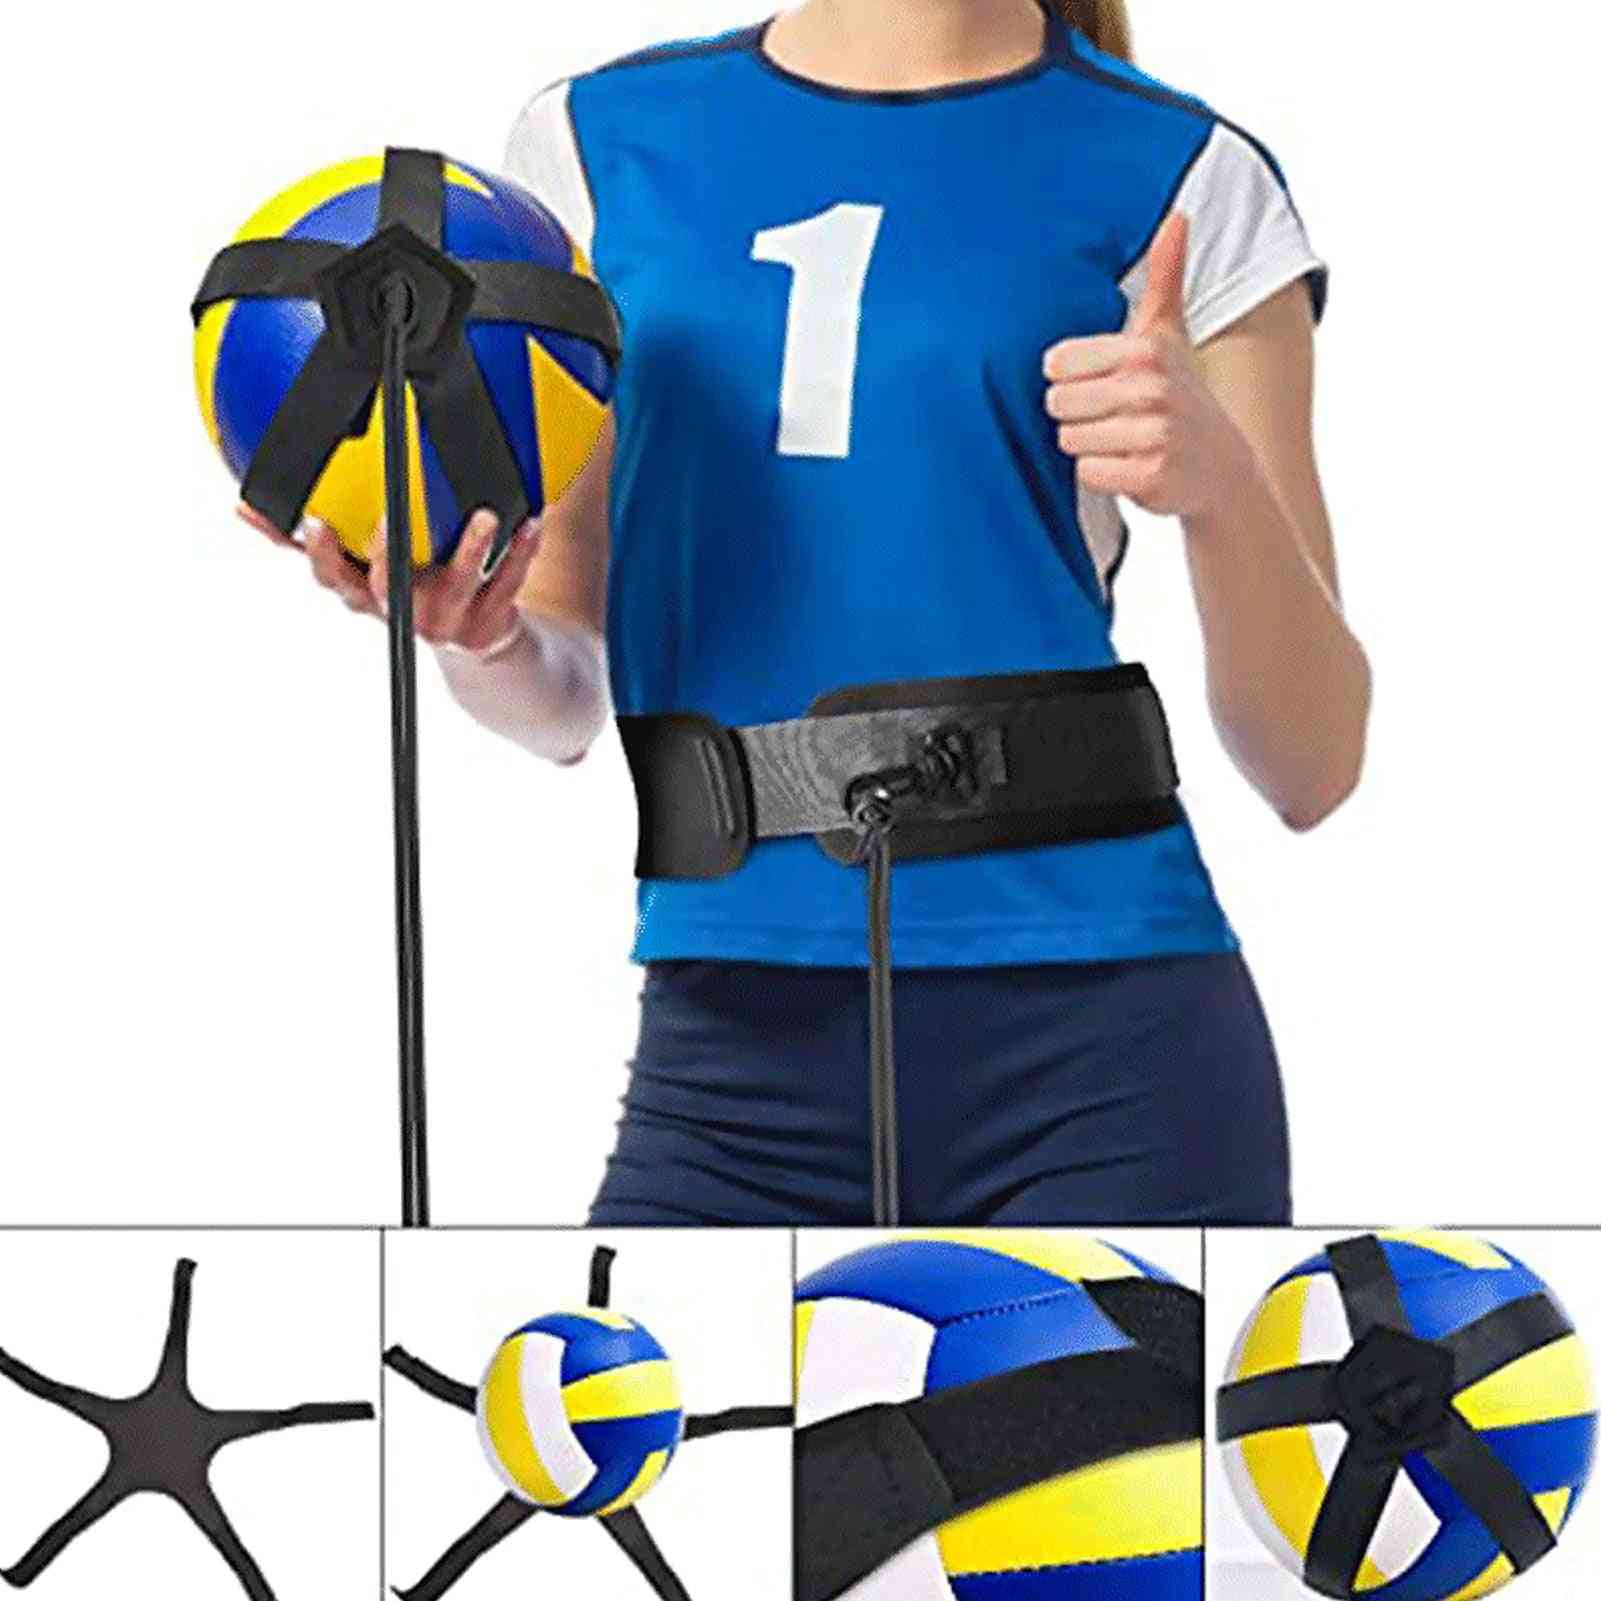 Volleyball Training Equipment Aid Training Belt